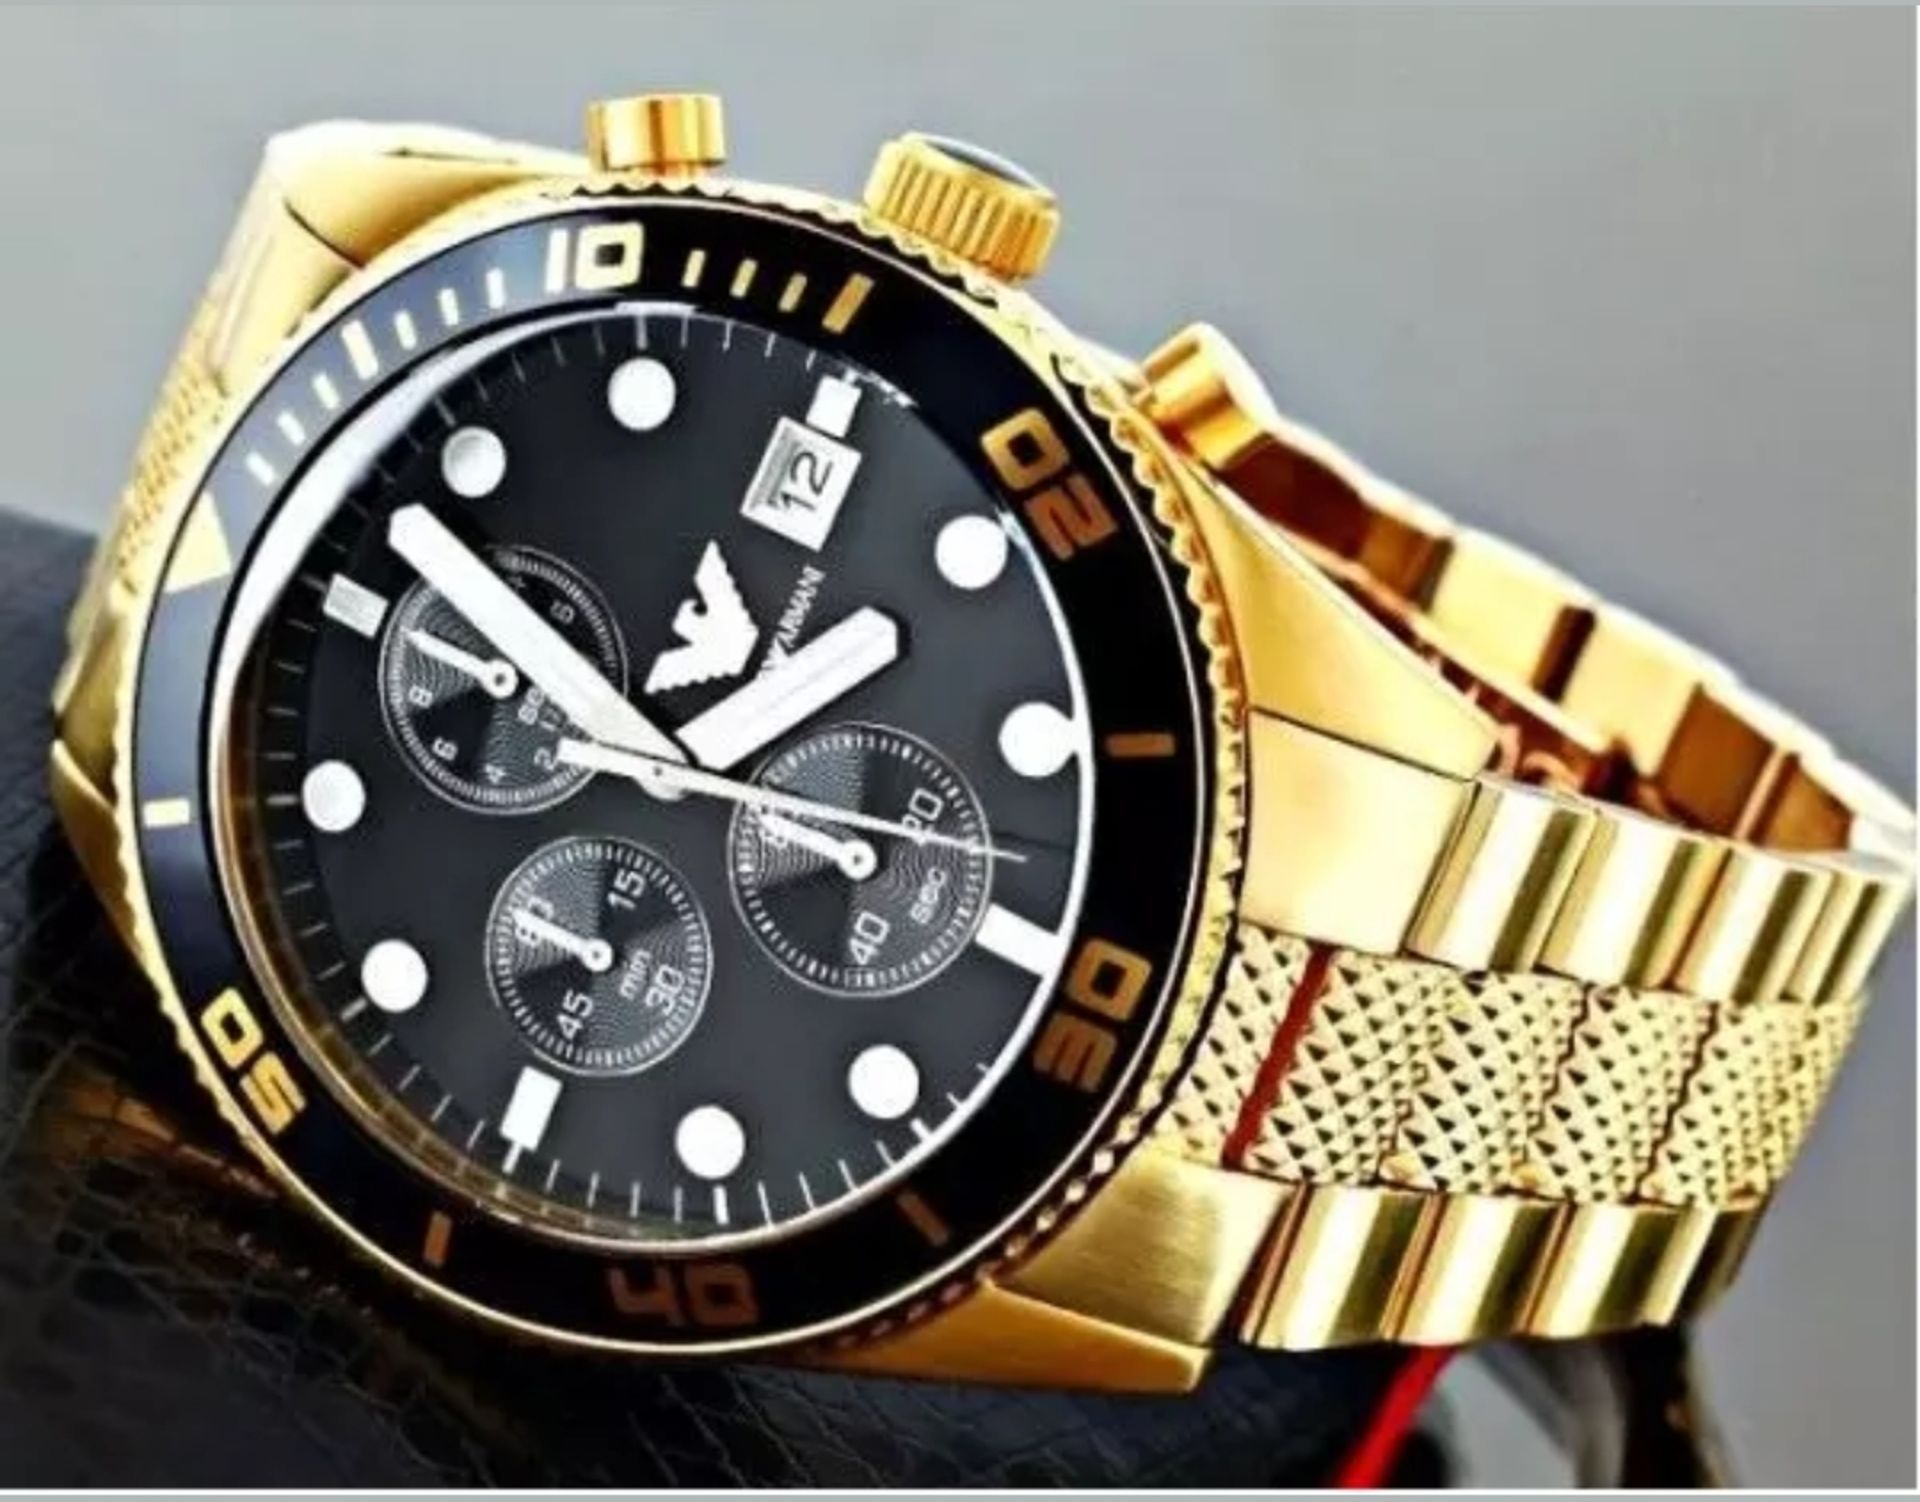 Emporio Armani AR5857 Black Dial Gold Tone Bracelet Quartz Chronograph Watch - Image 4 of 10